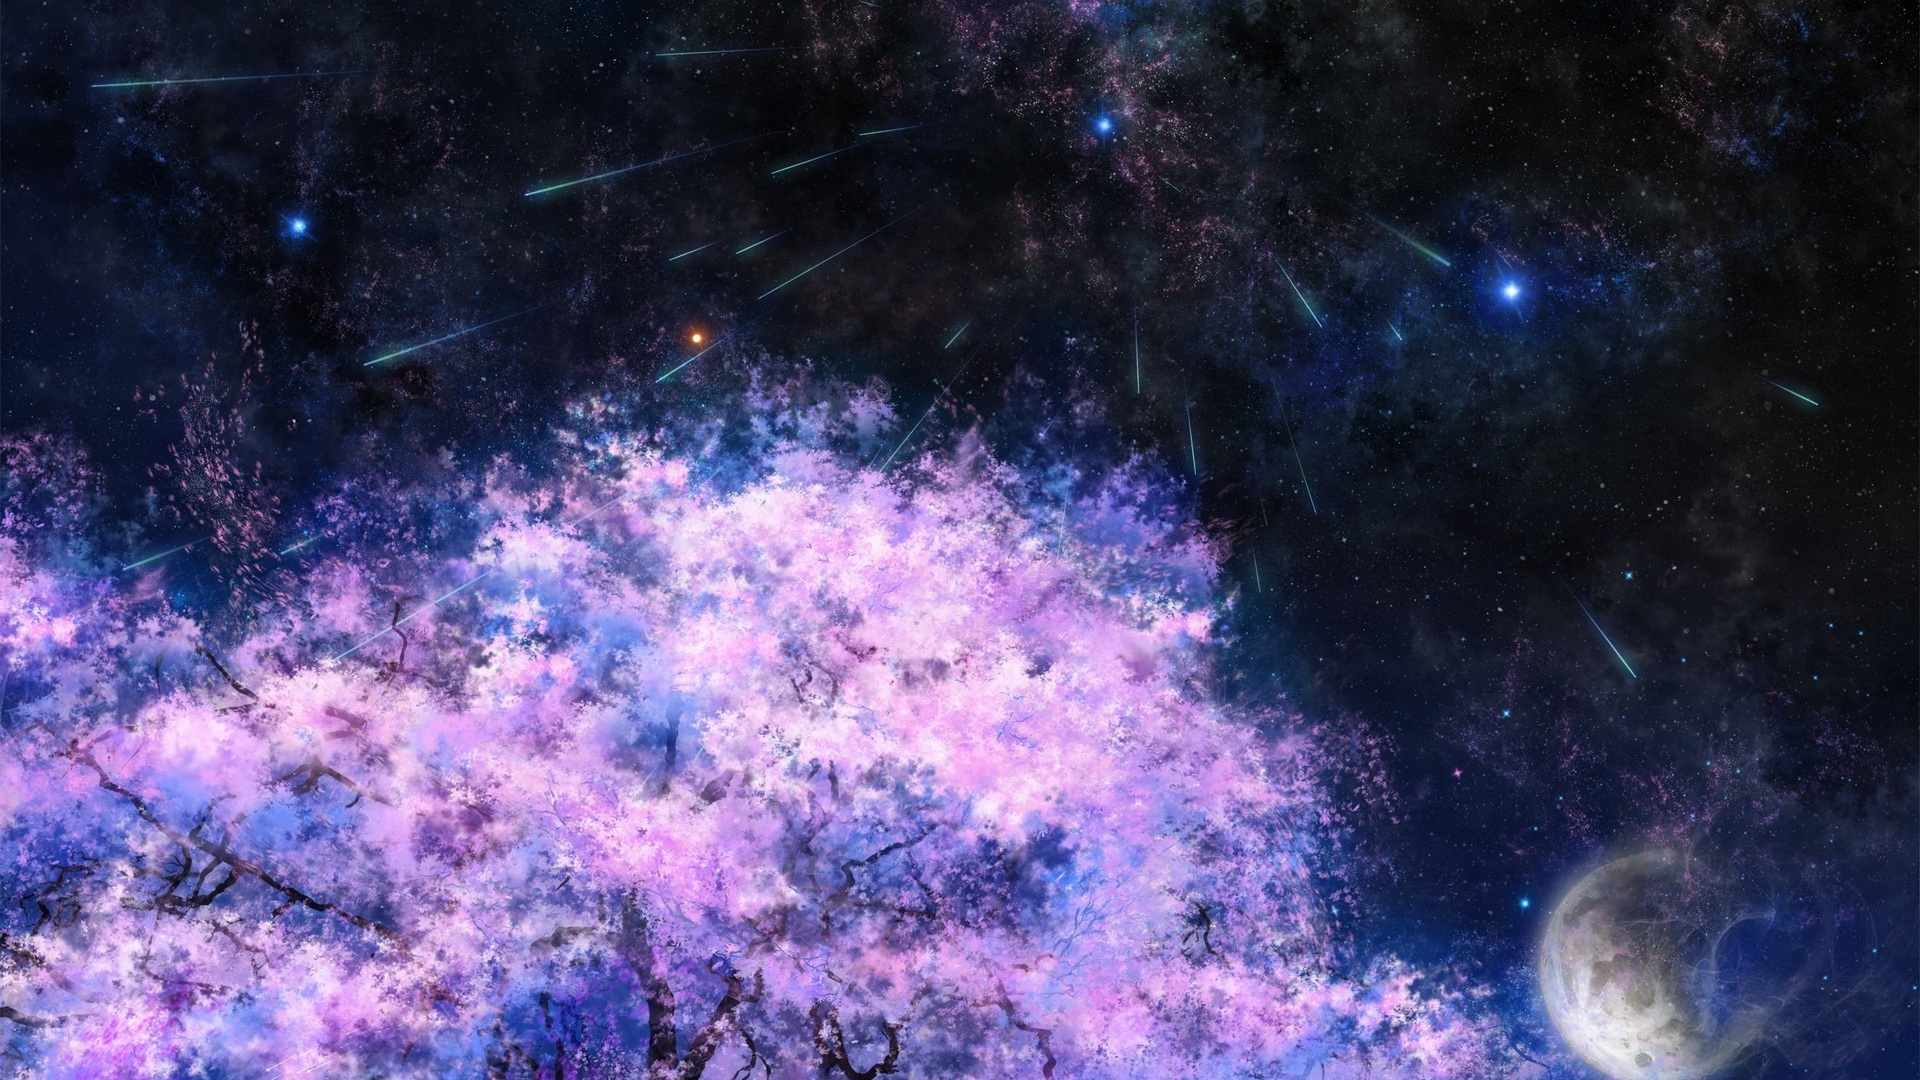 Tree, Sakura, Tsujiki, Space, The Moon, Stars, Art, - Cherry Blossom Night Wallpaper  Anime - 1920x1080 Wallpaper 